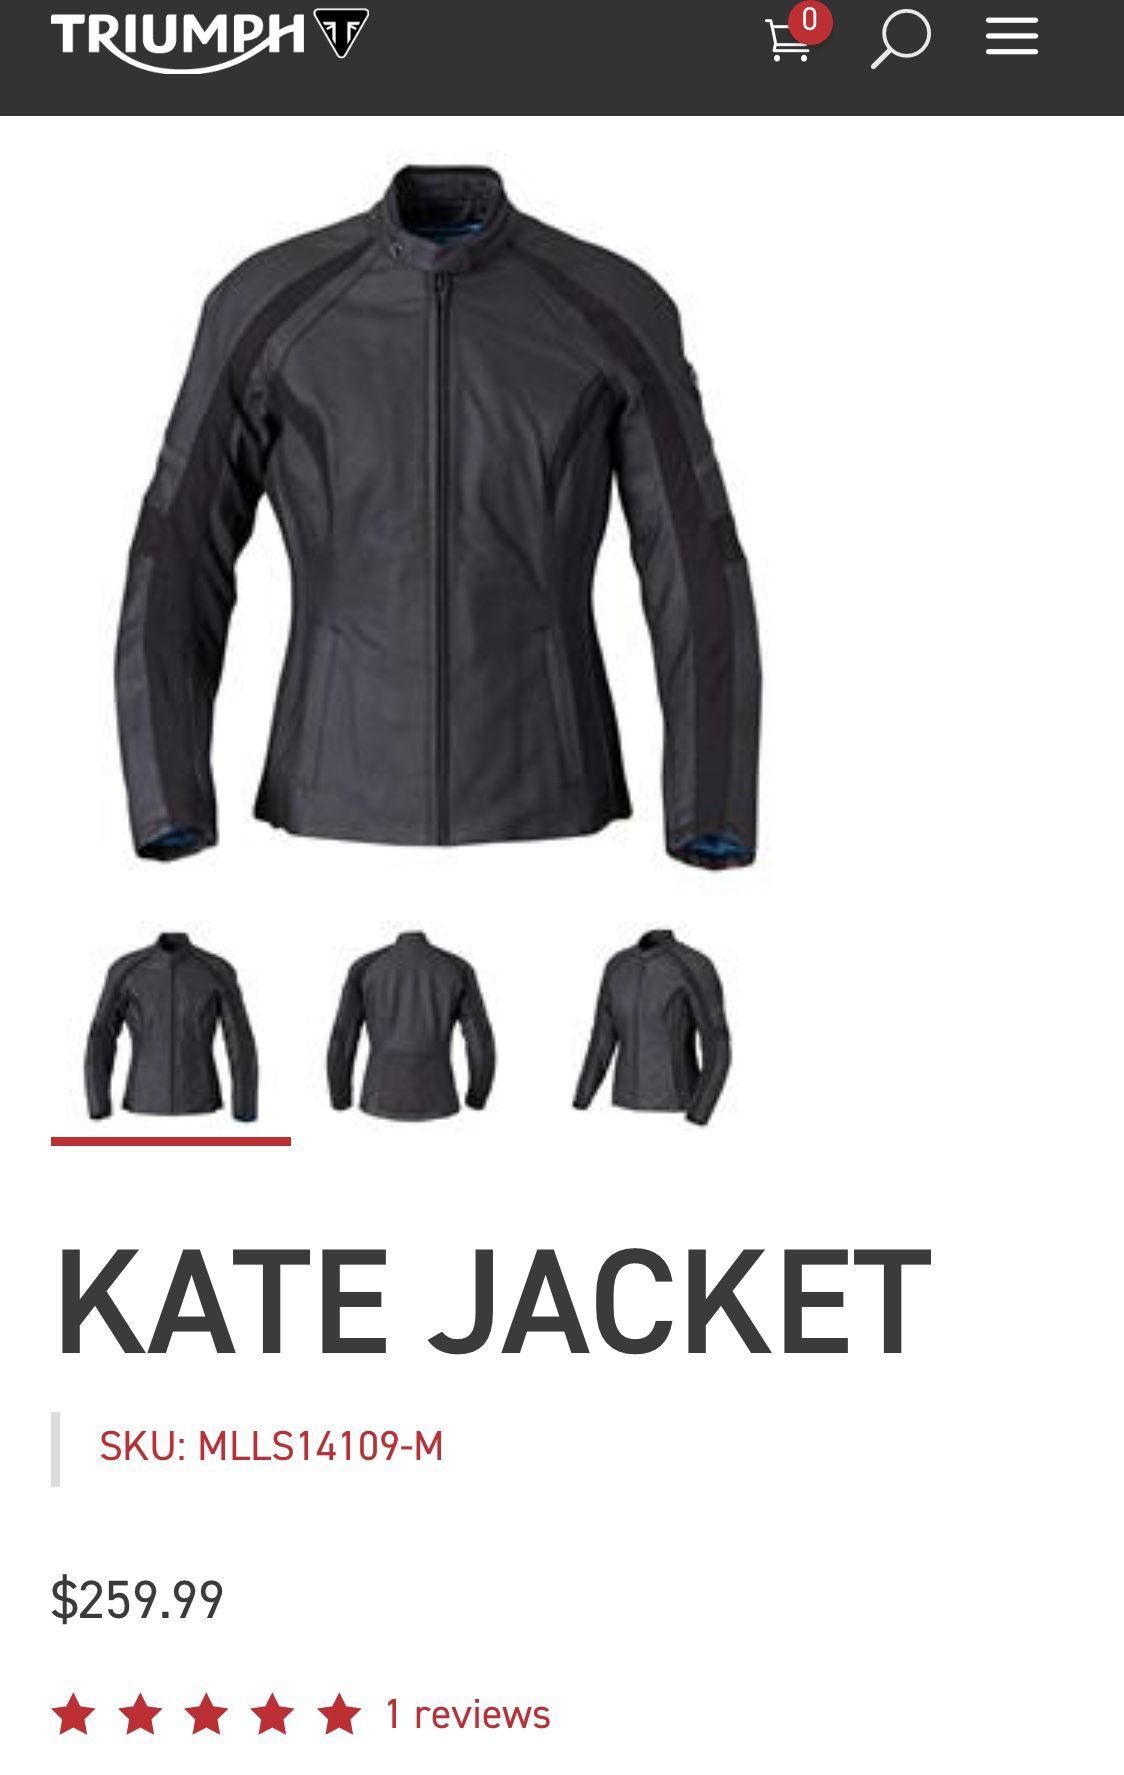 [NEW] Triumph Motorcycle Kate Jacket size: 2L